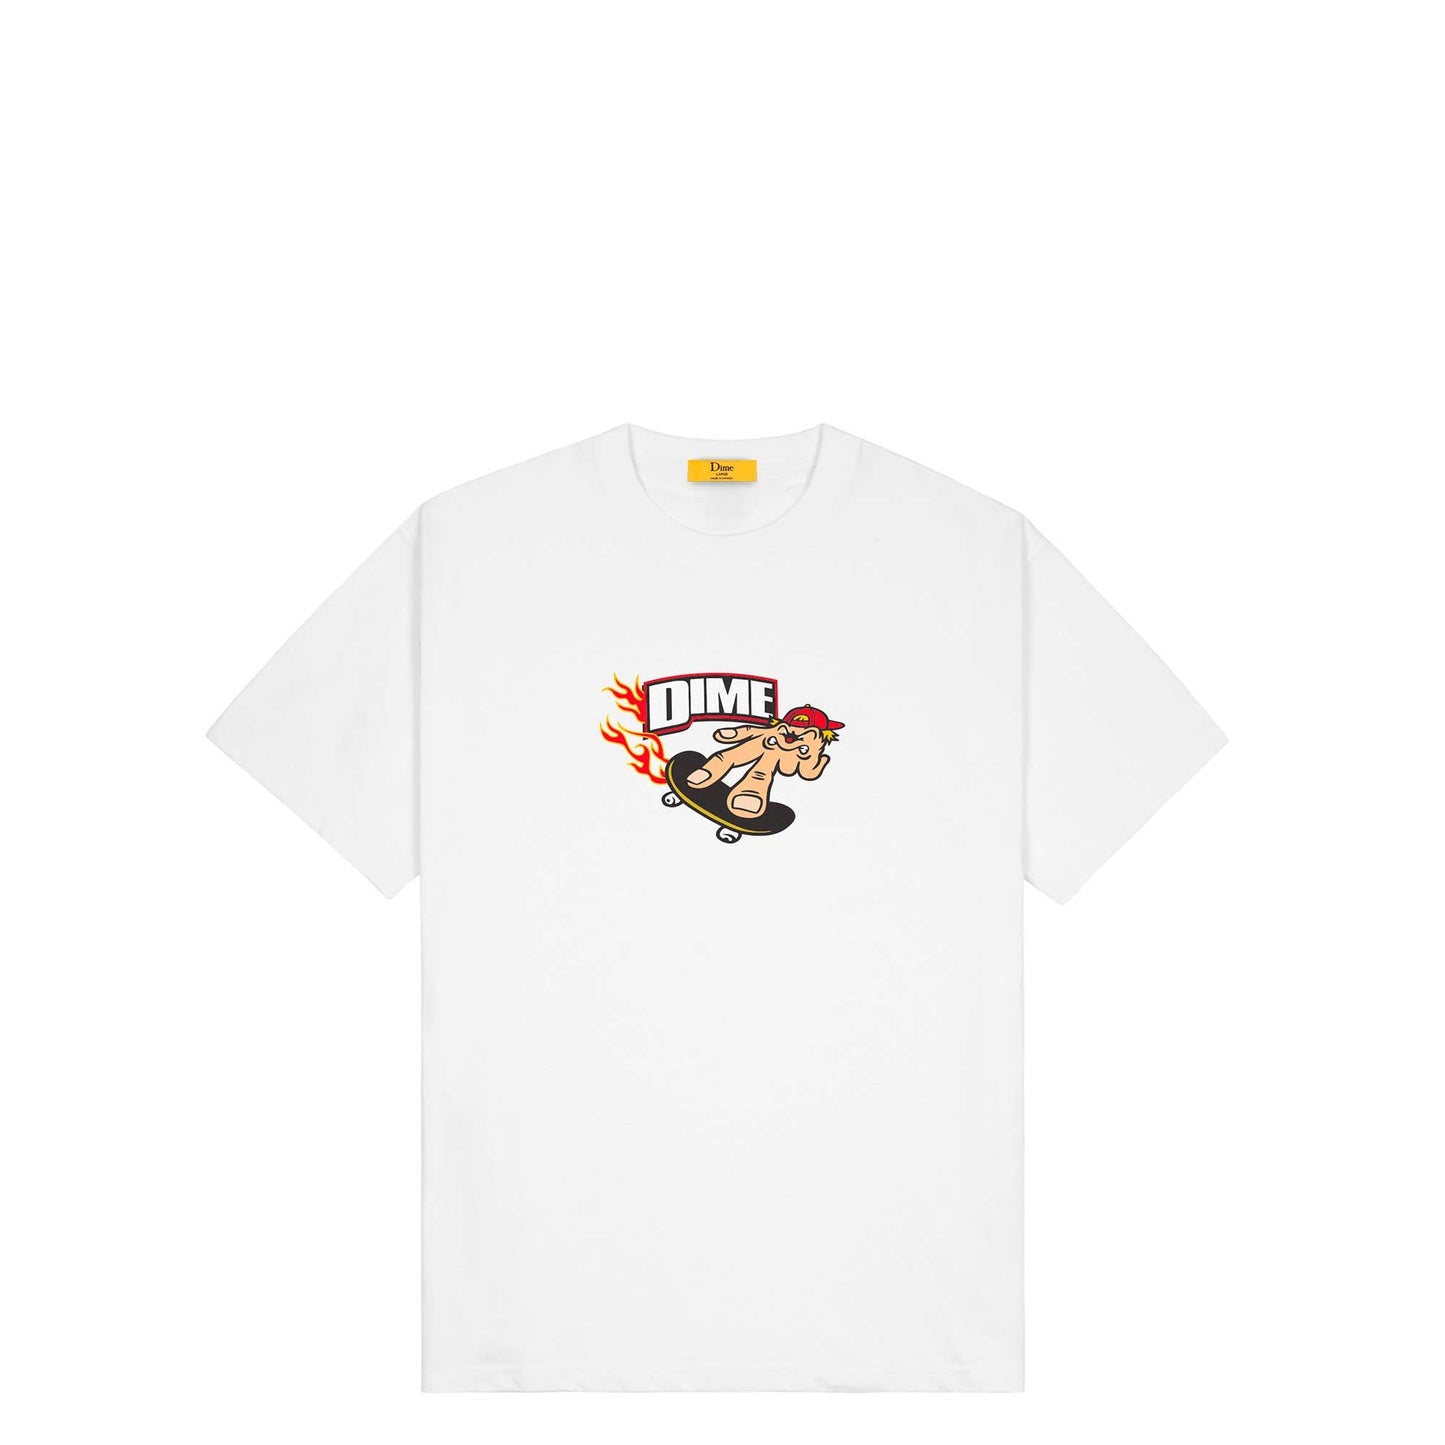 Dime Decker T-Shirt, white - Tiki Room Skateboards - 1